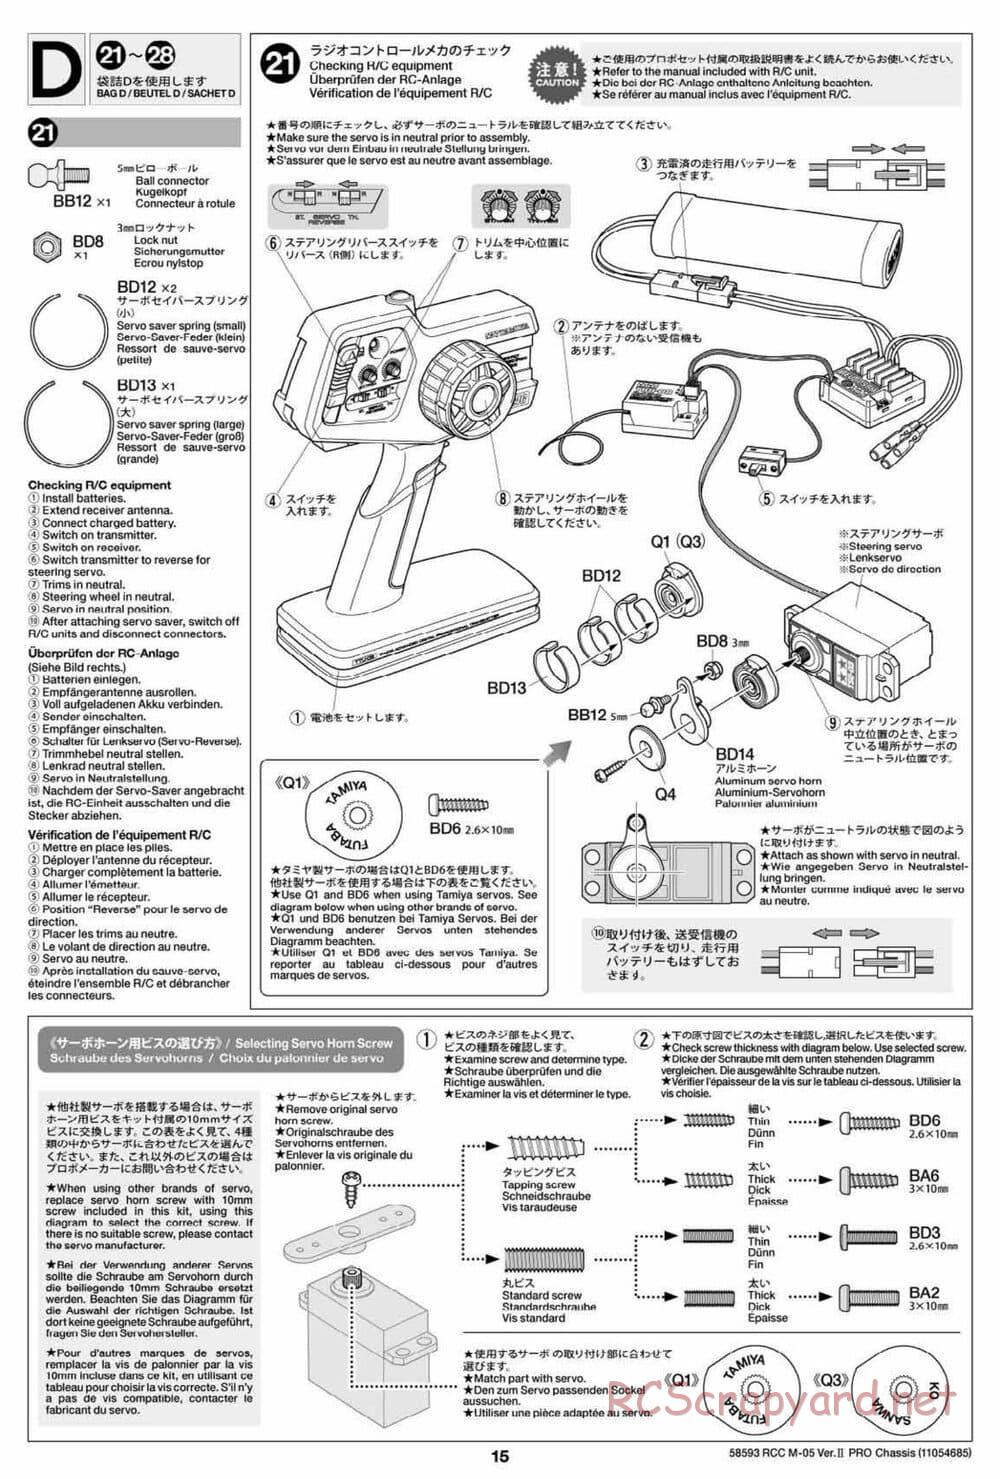 Tamiya - M-05 Ver.II Pro Chassis - Manual - Page 15